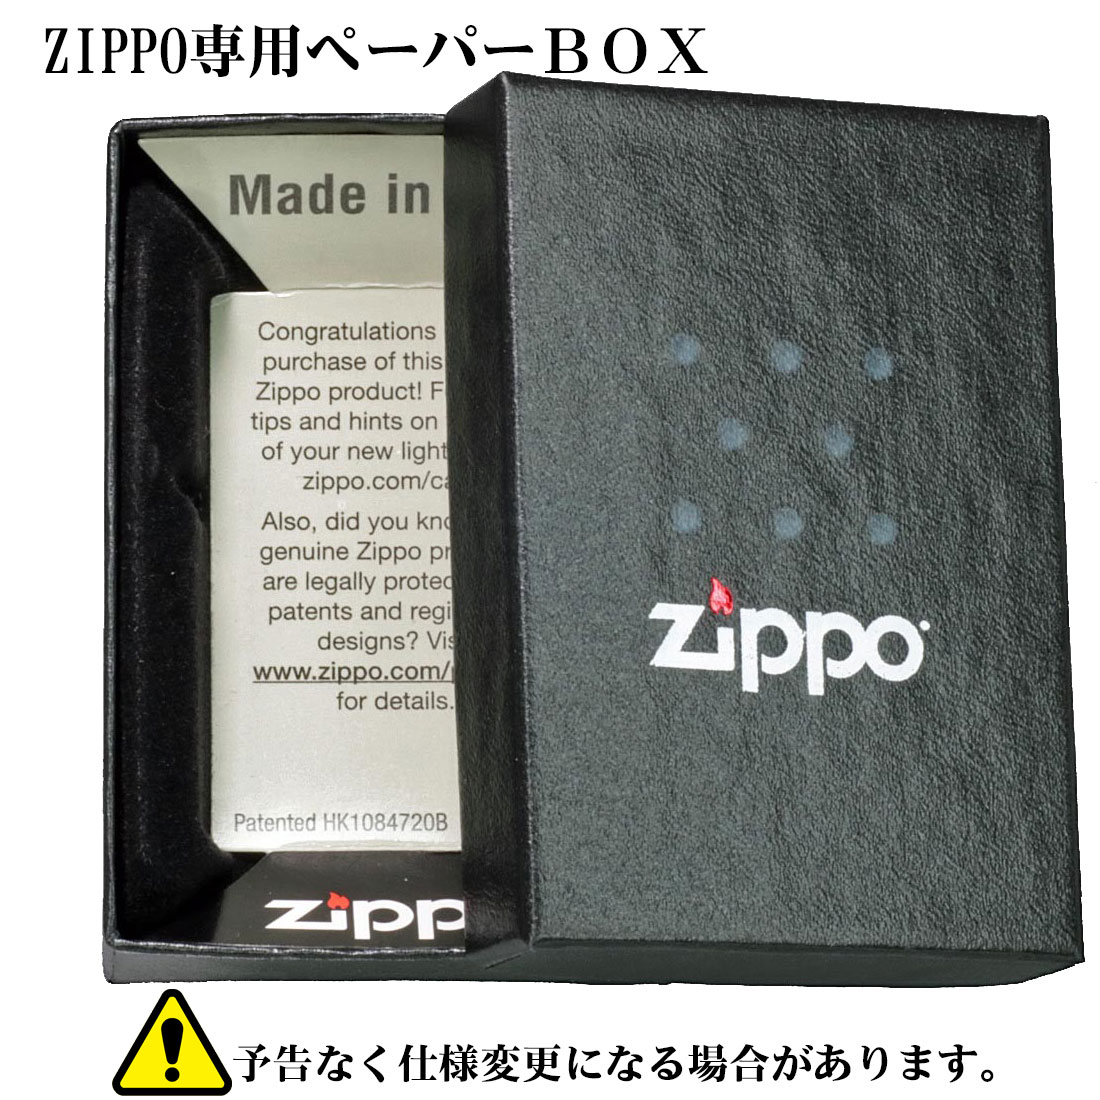 ZIPPO保証書画像